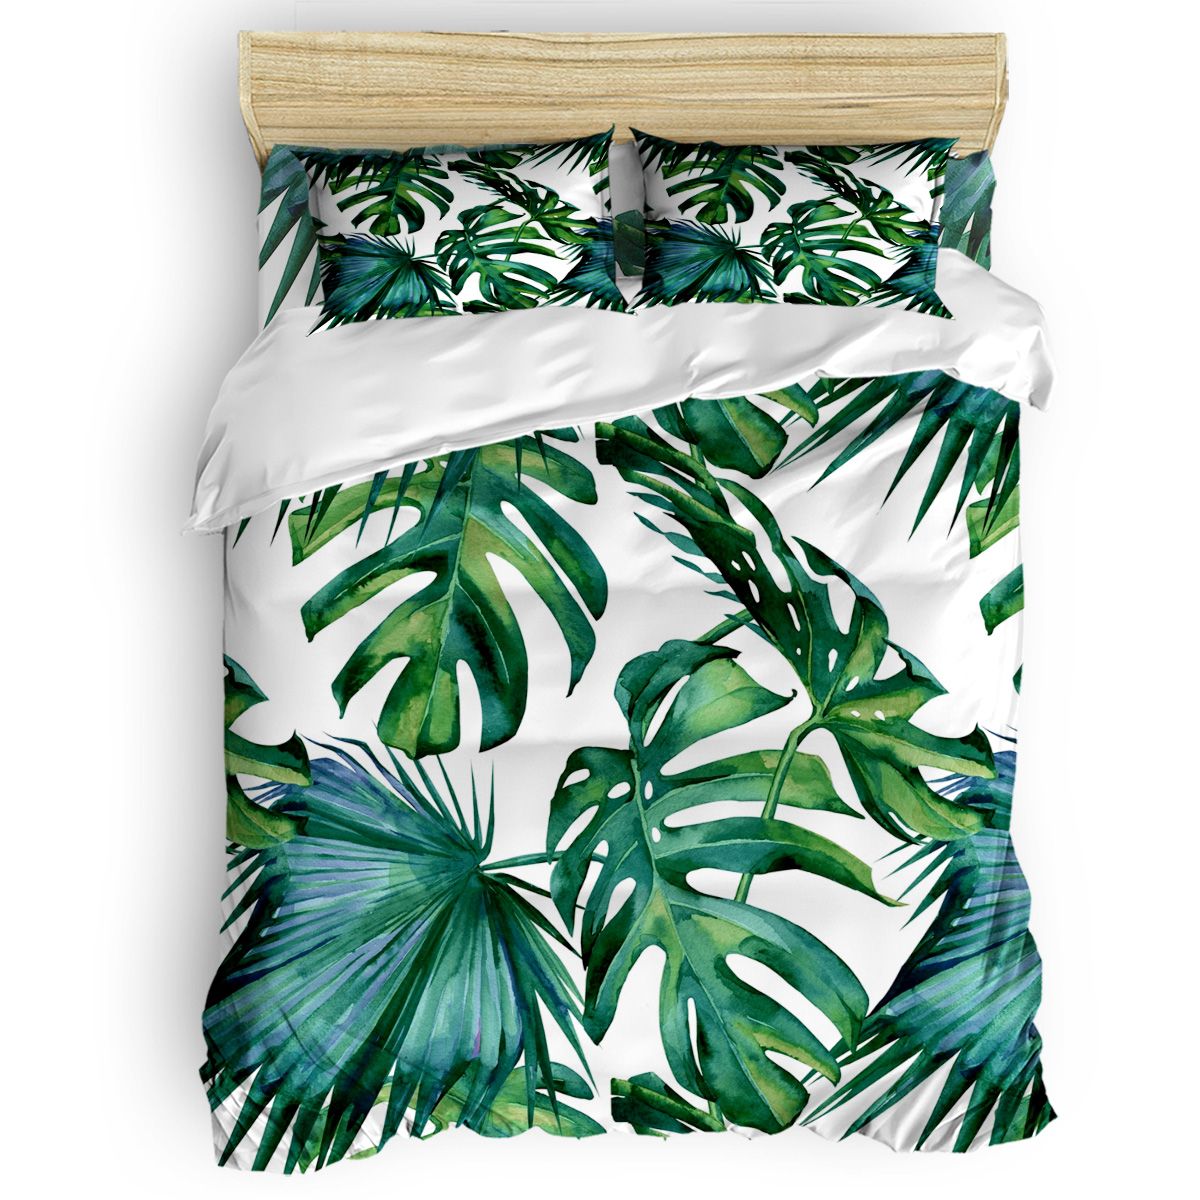 Classic Palm Leaves Tropical Jungle Green Duvet Cover 3d Cotton